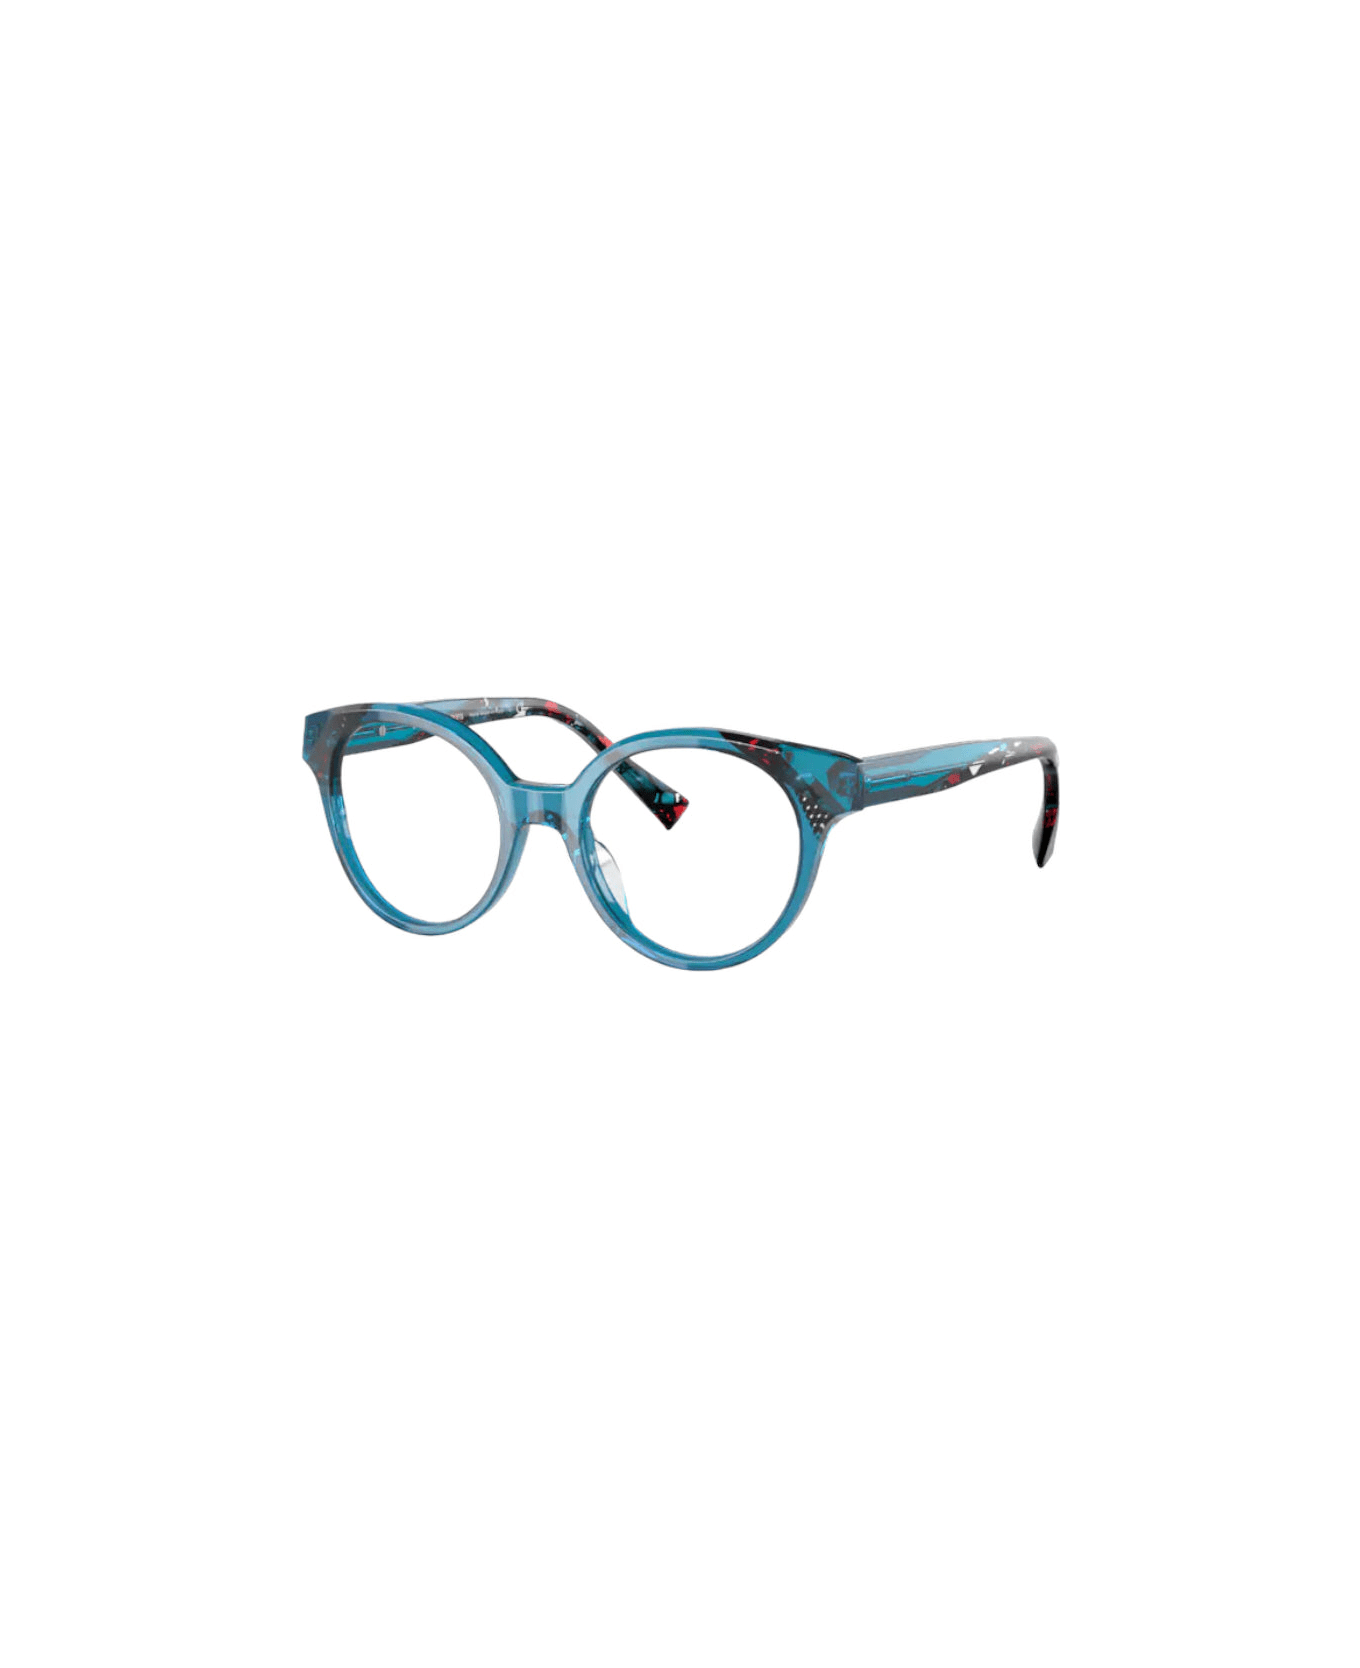 Alain Mikli Sevoie - 3143 - Red / Blu Glasses アイウェア